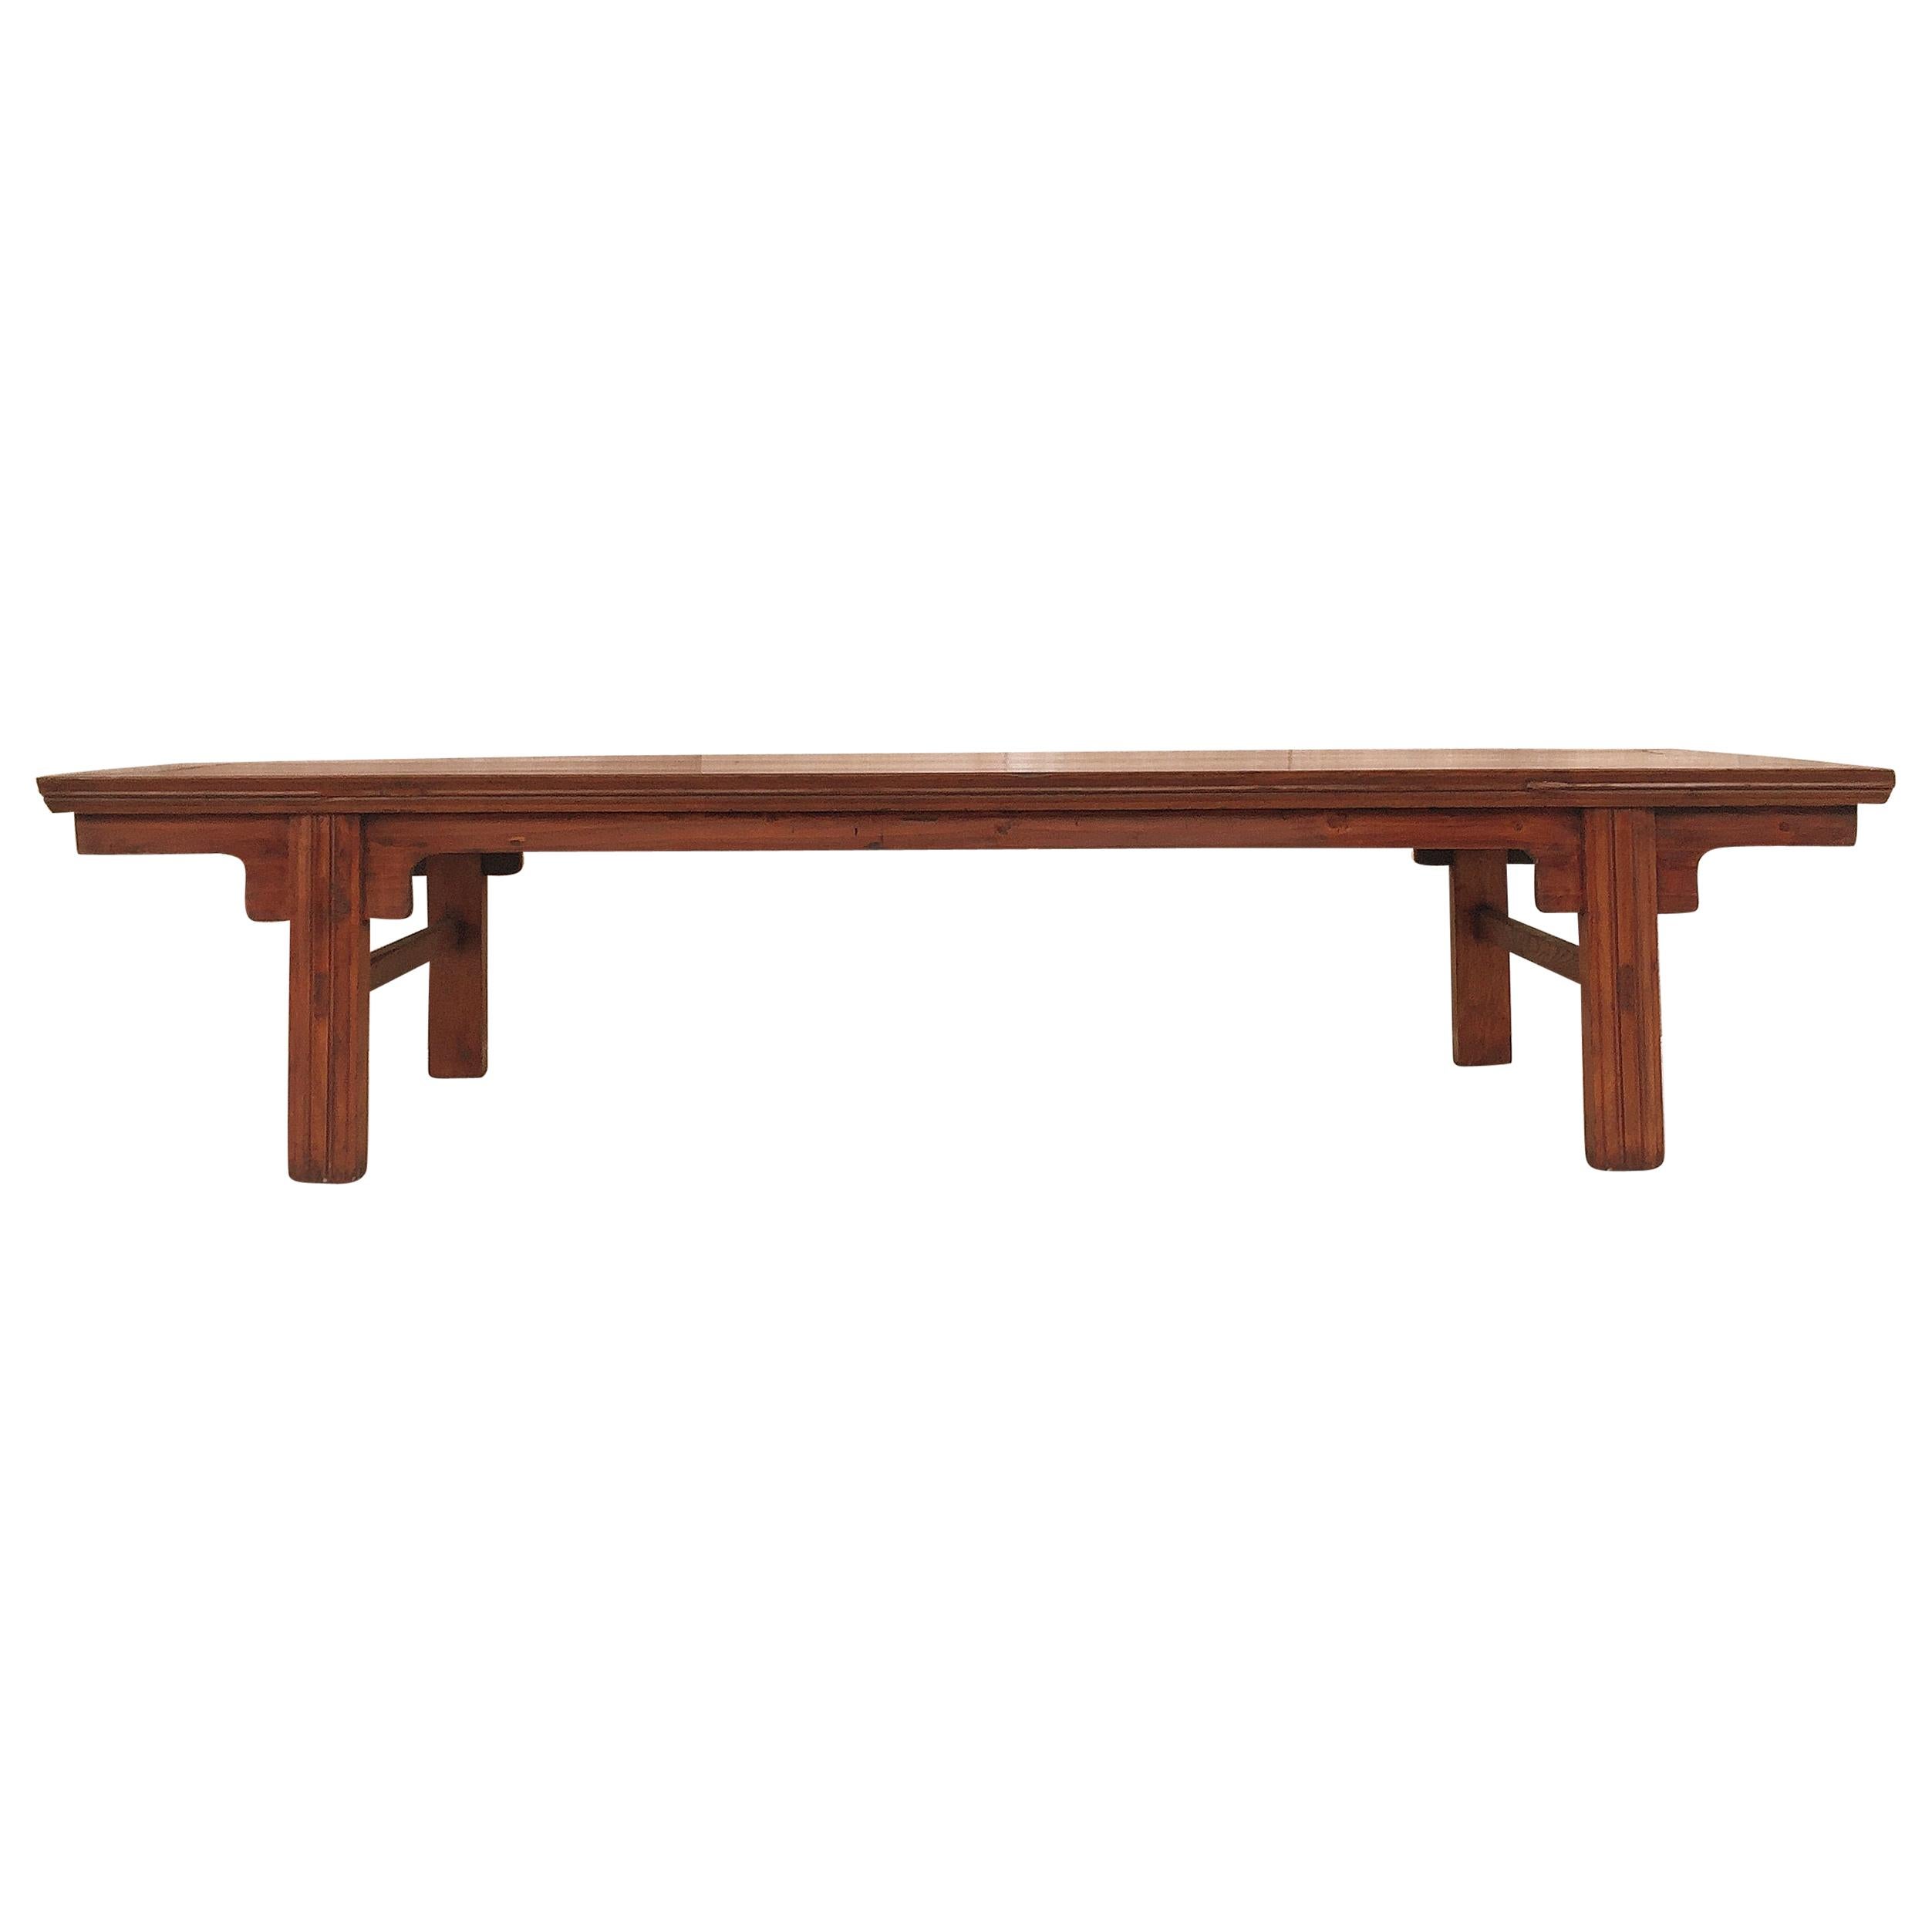 Grande table basse en bois de jumu